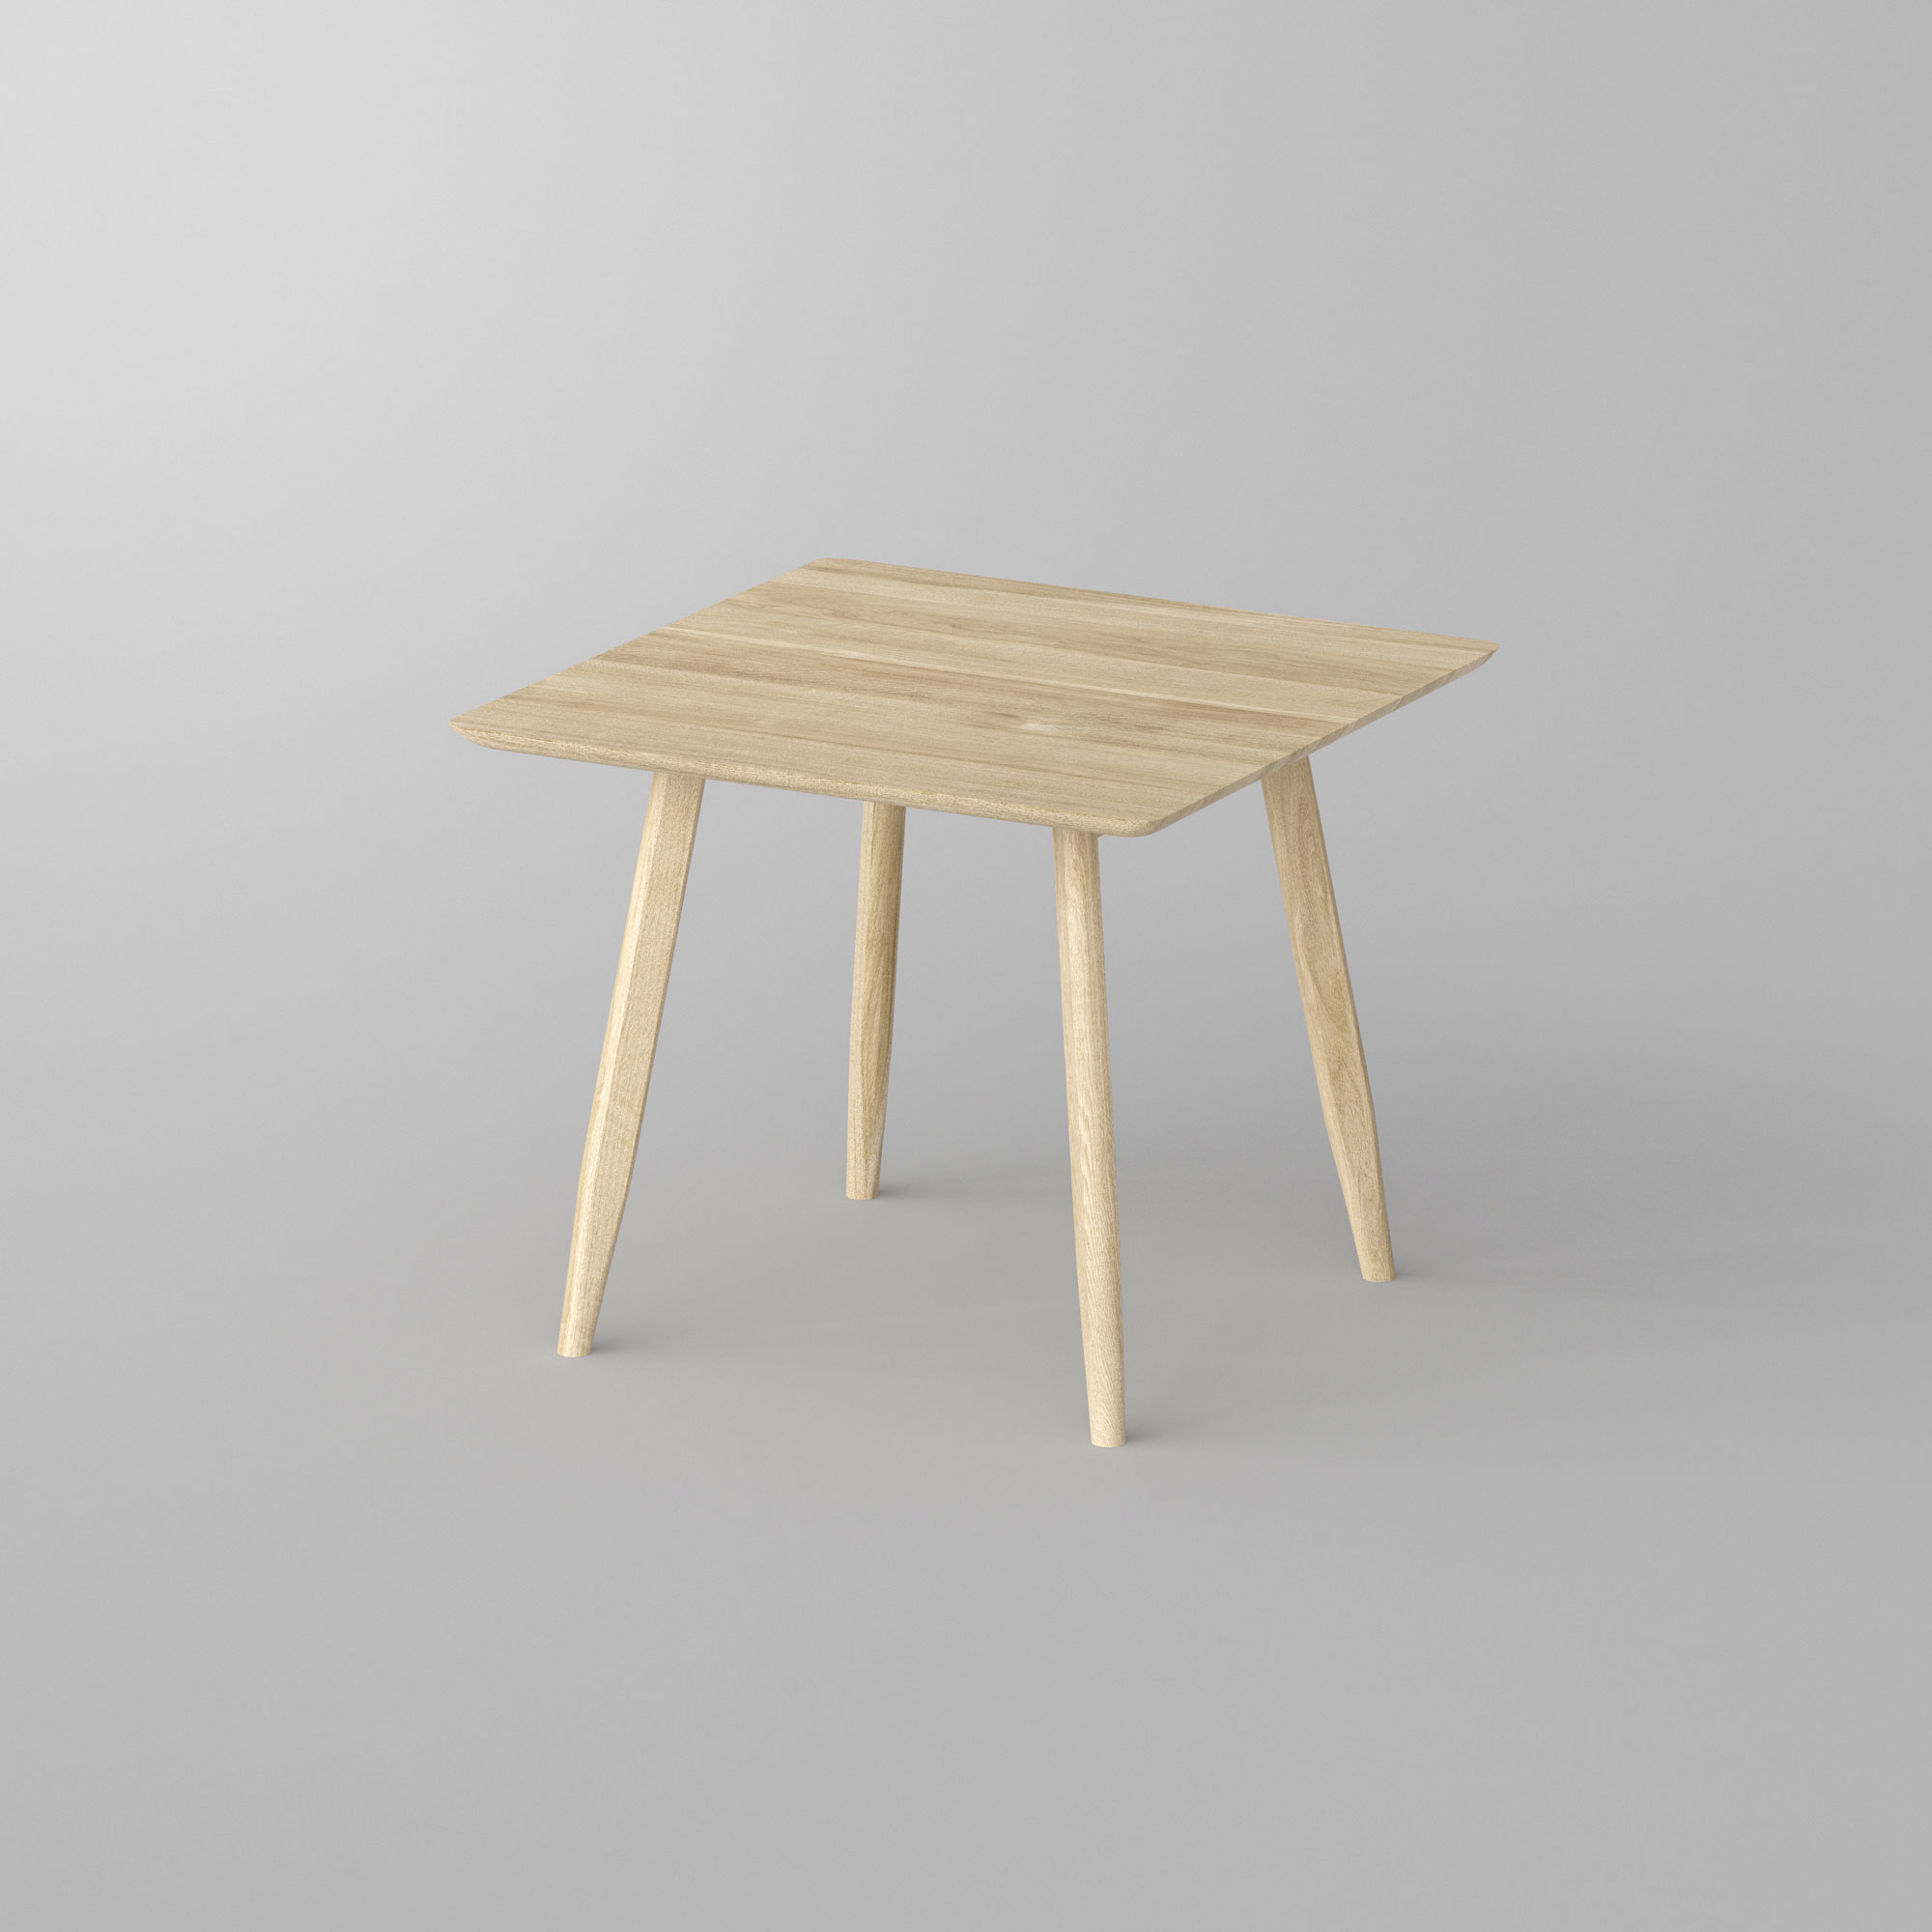 Designer Dining Table Wood AETAS BASIC 3 vitamin-design custom made in solid wood by vitamin design